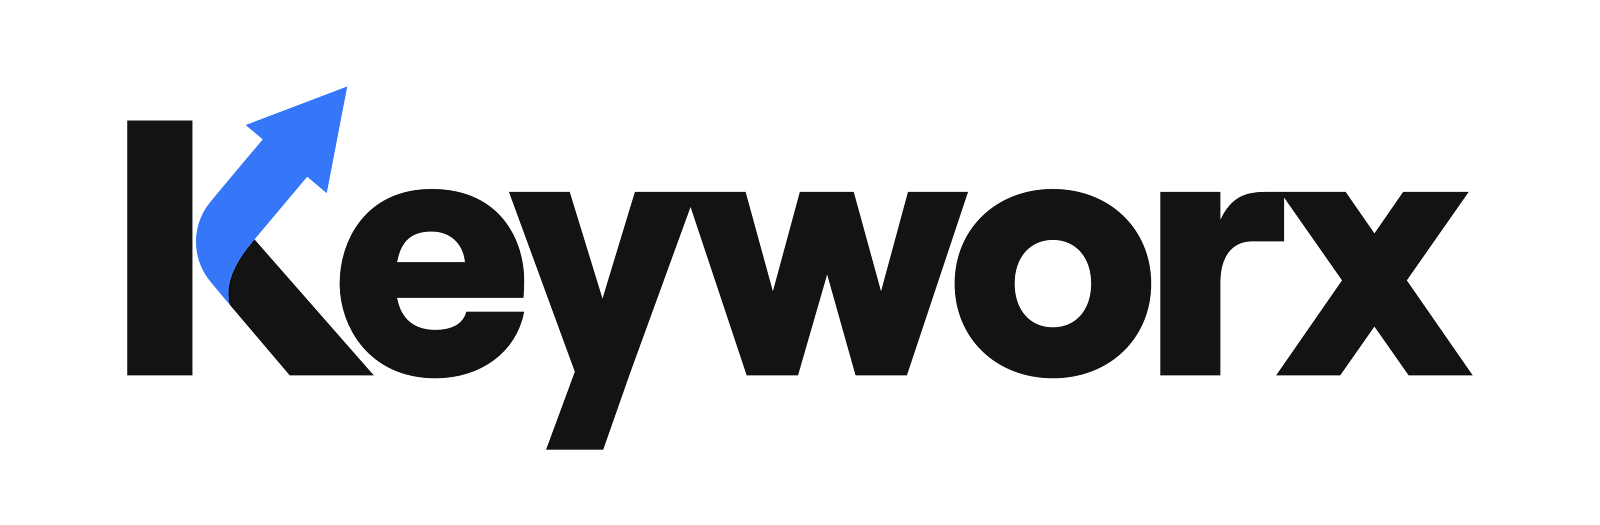 Keyworx - The #1 Amazon Keyword Rank Tracker